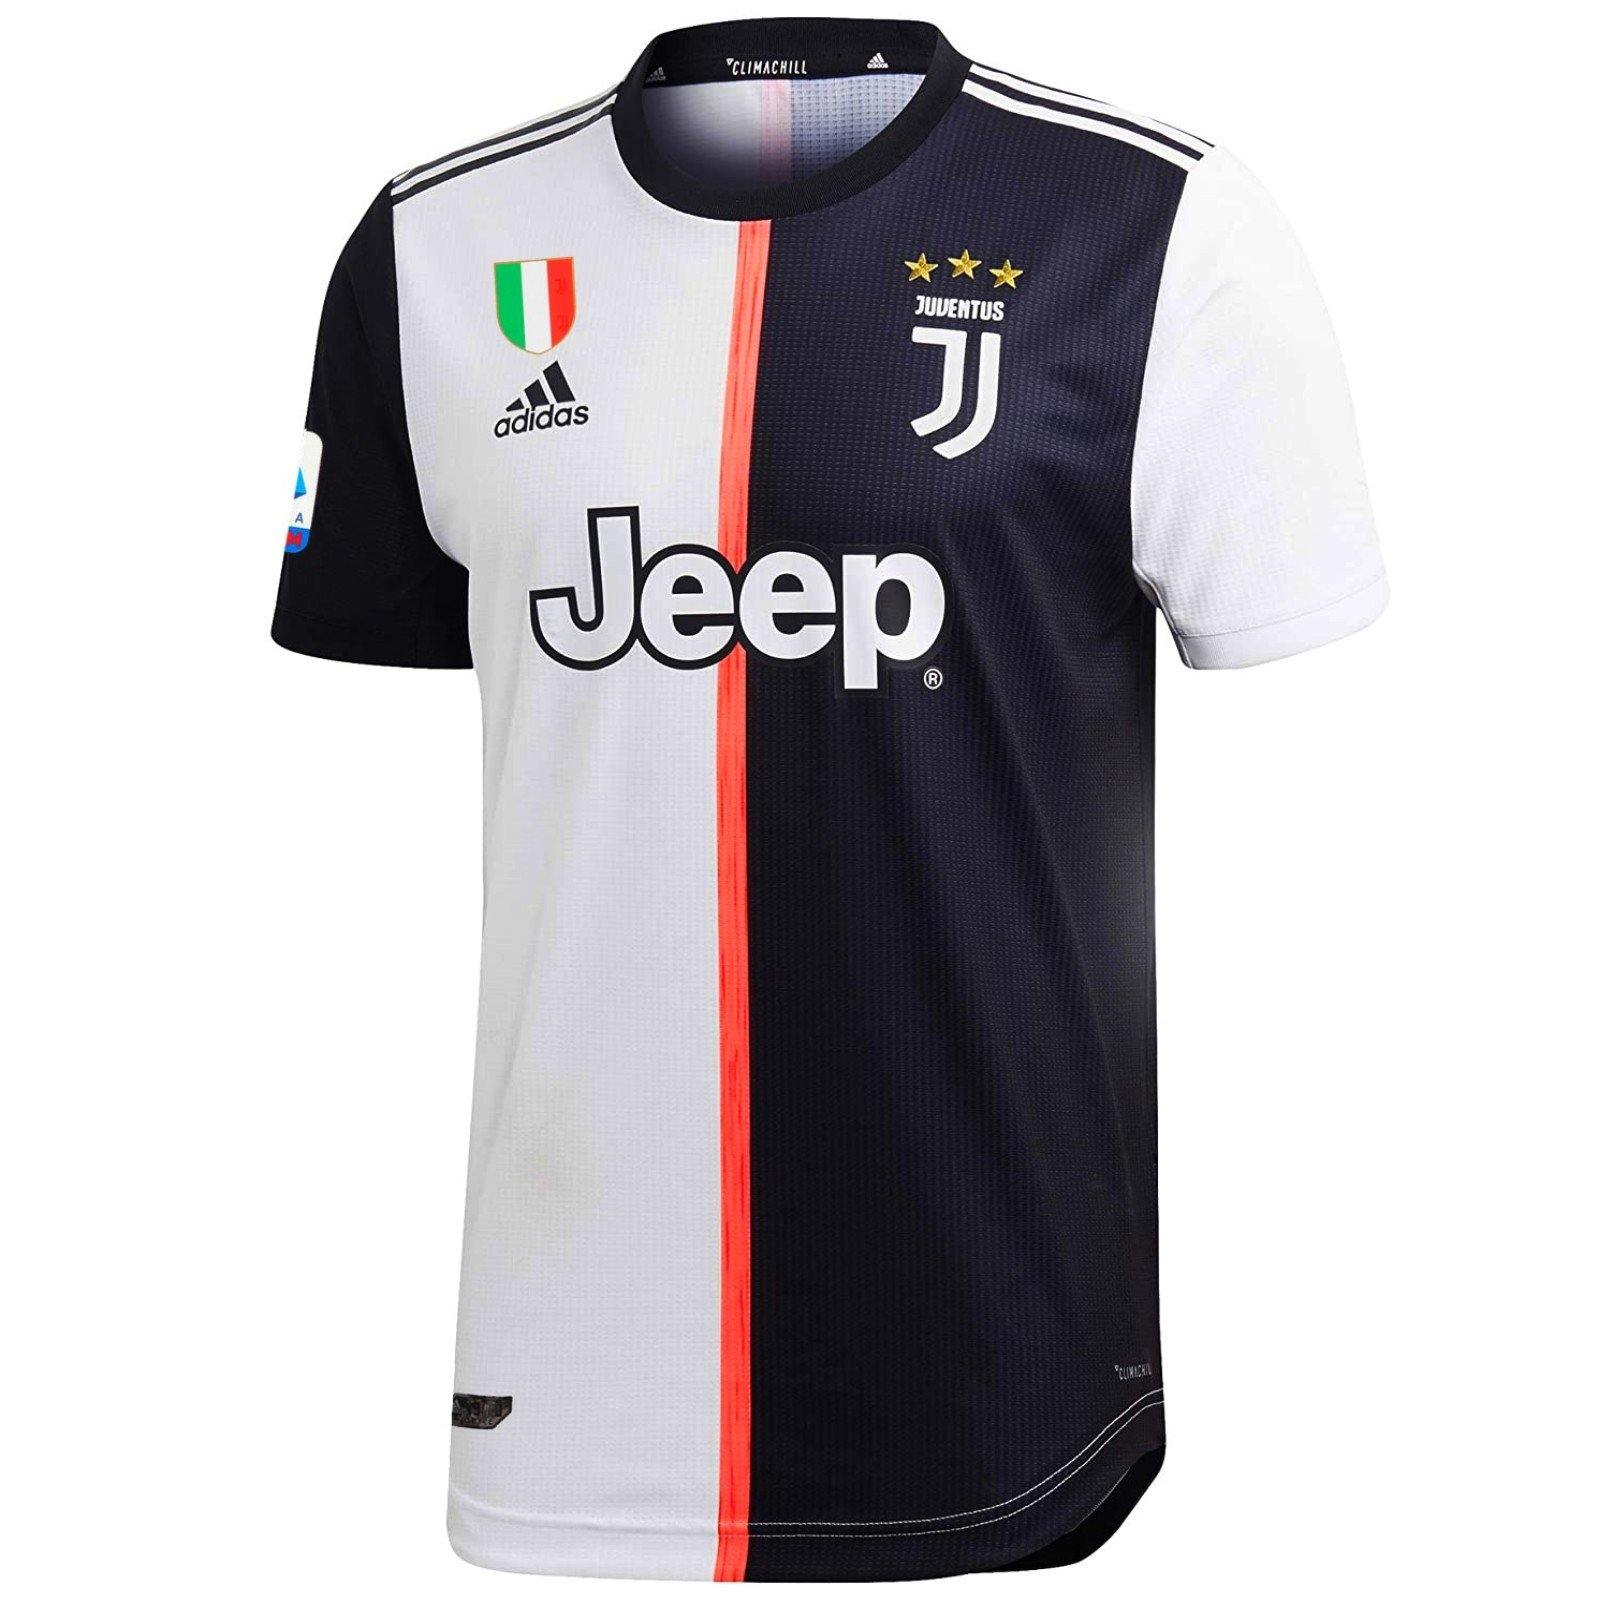 helper Lelie voelen Juventus Cristiano Ronaldo Home soccer jersey Player Issue 2019/20 - Adidas  – SoccerTracksuits.com